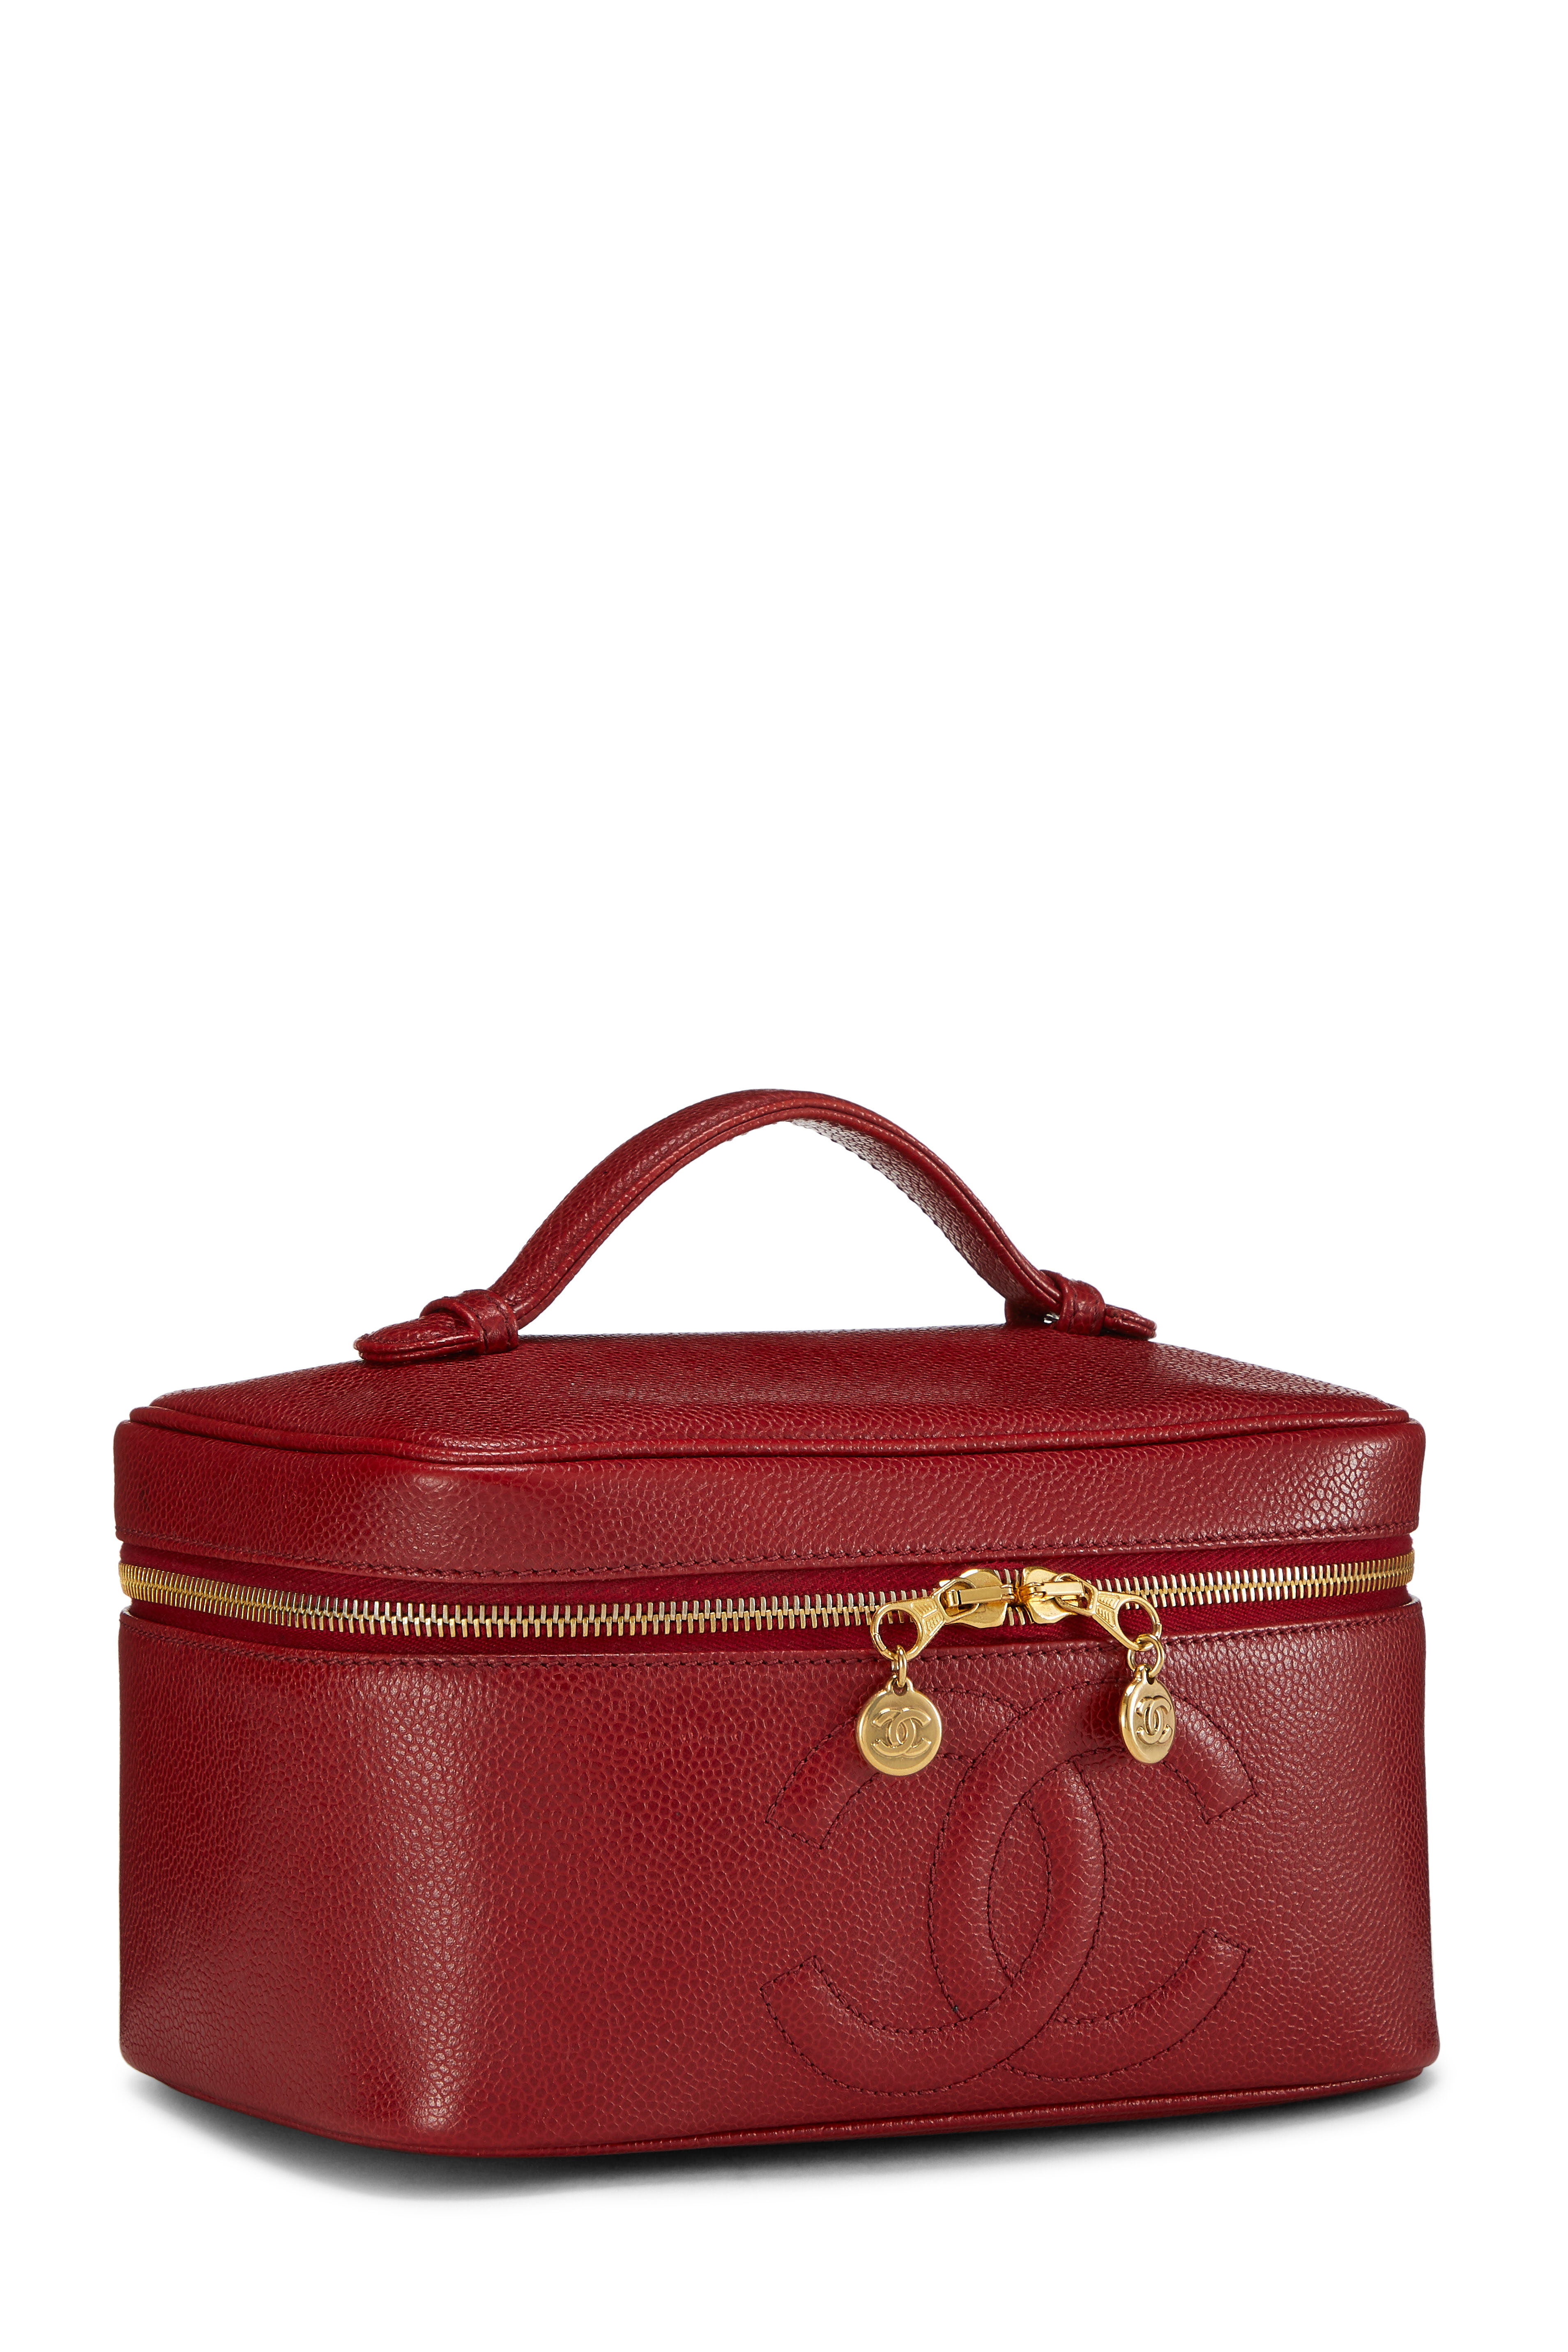 red chanel bucket bag vintage